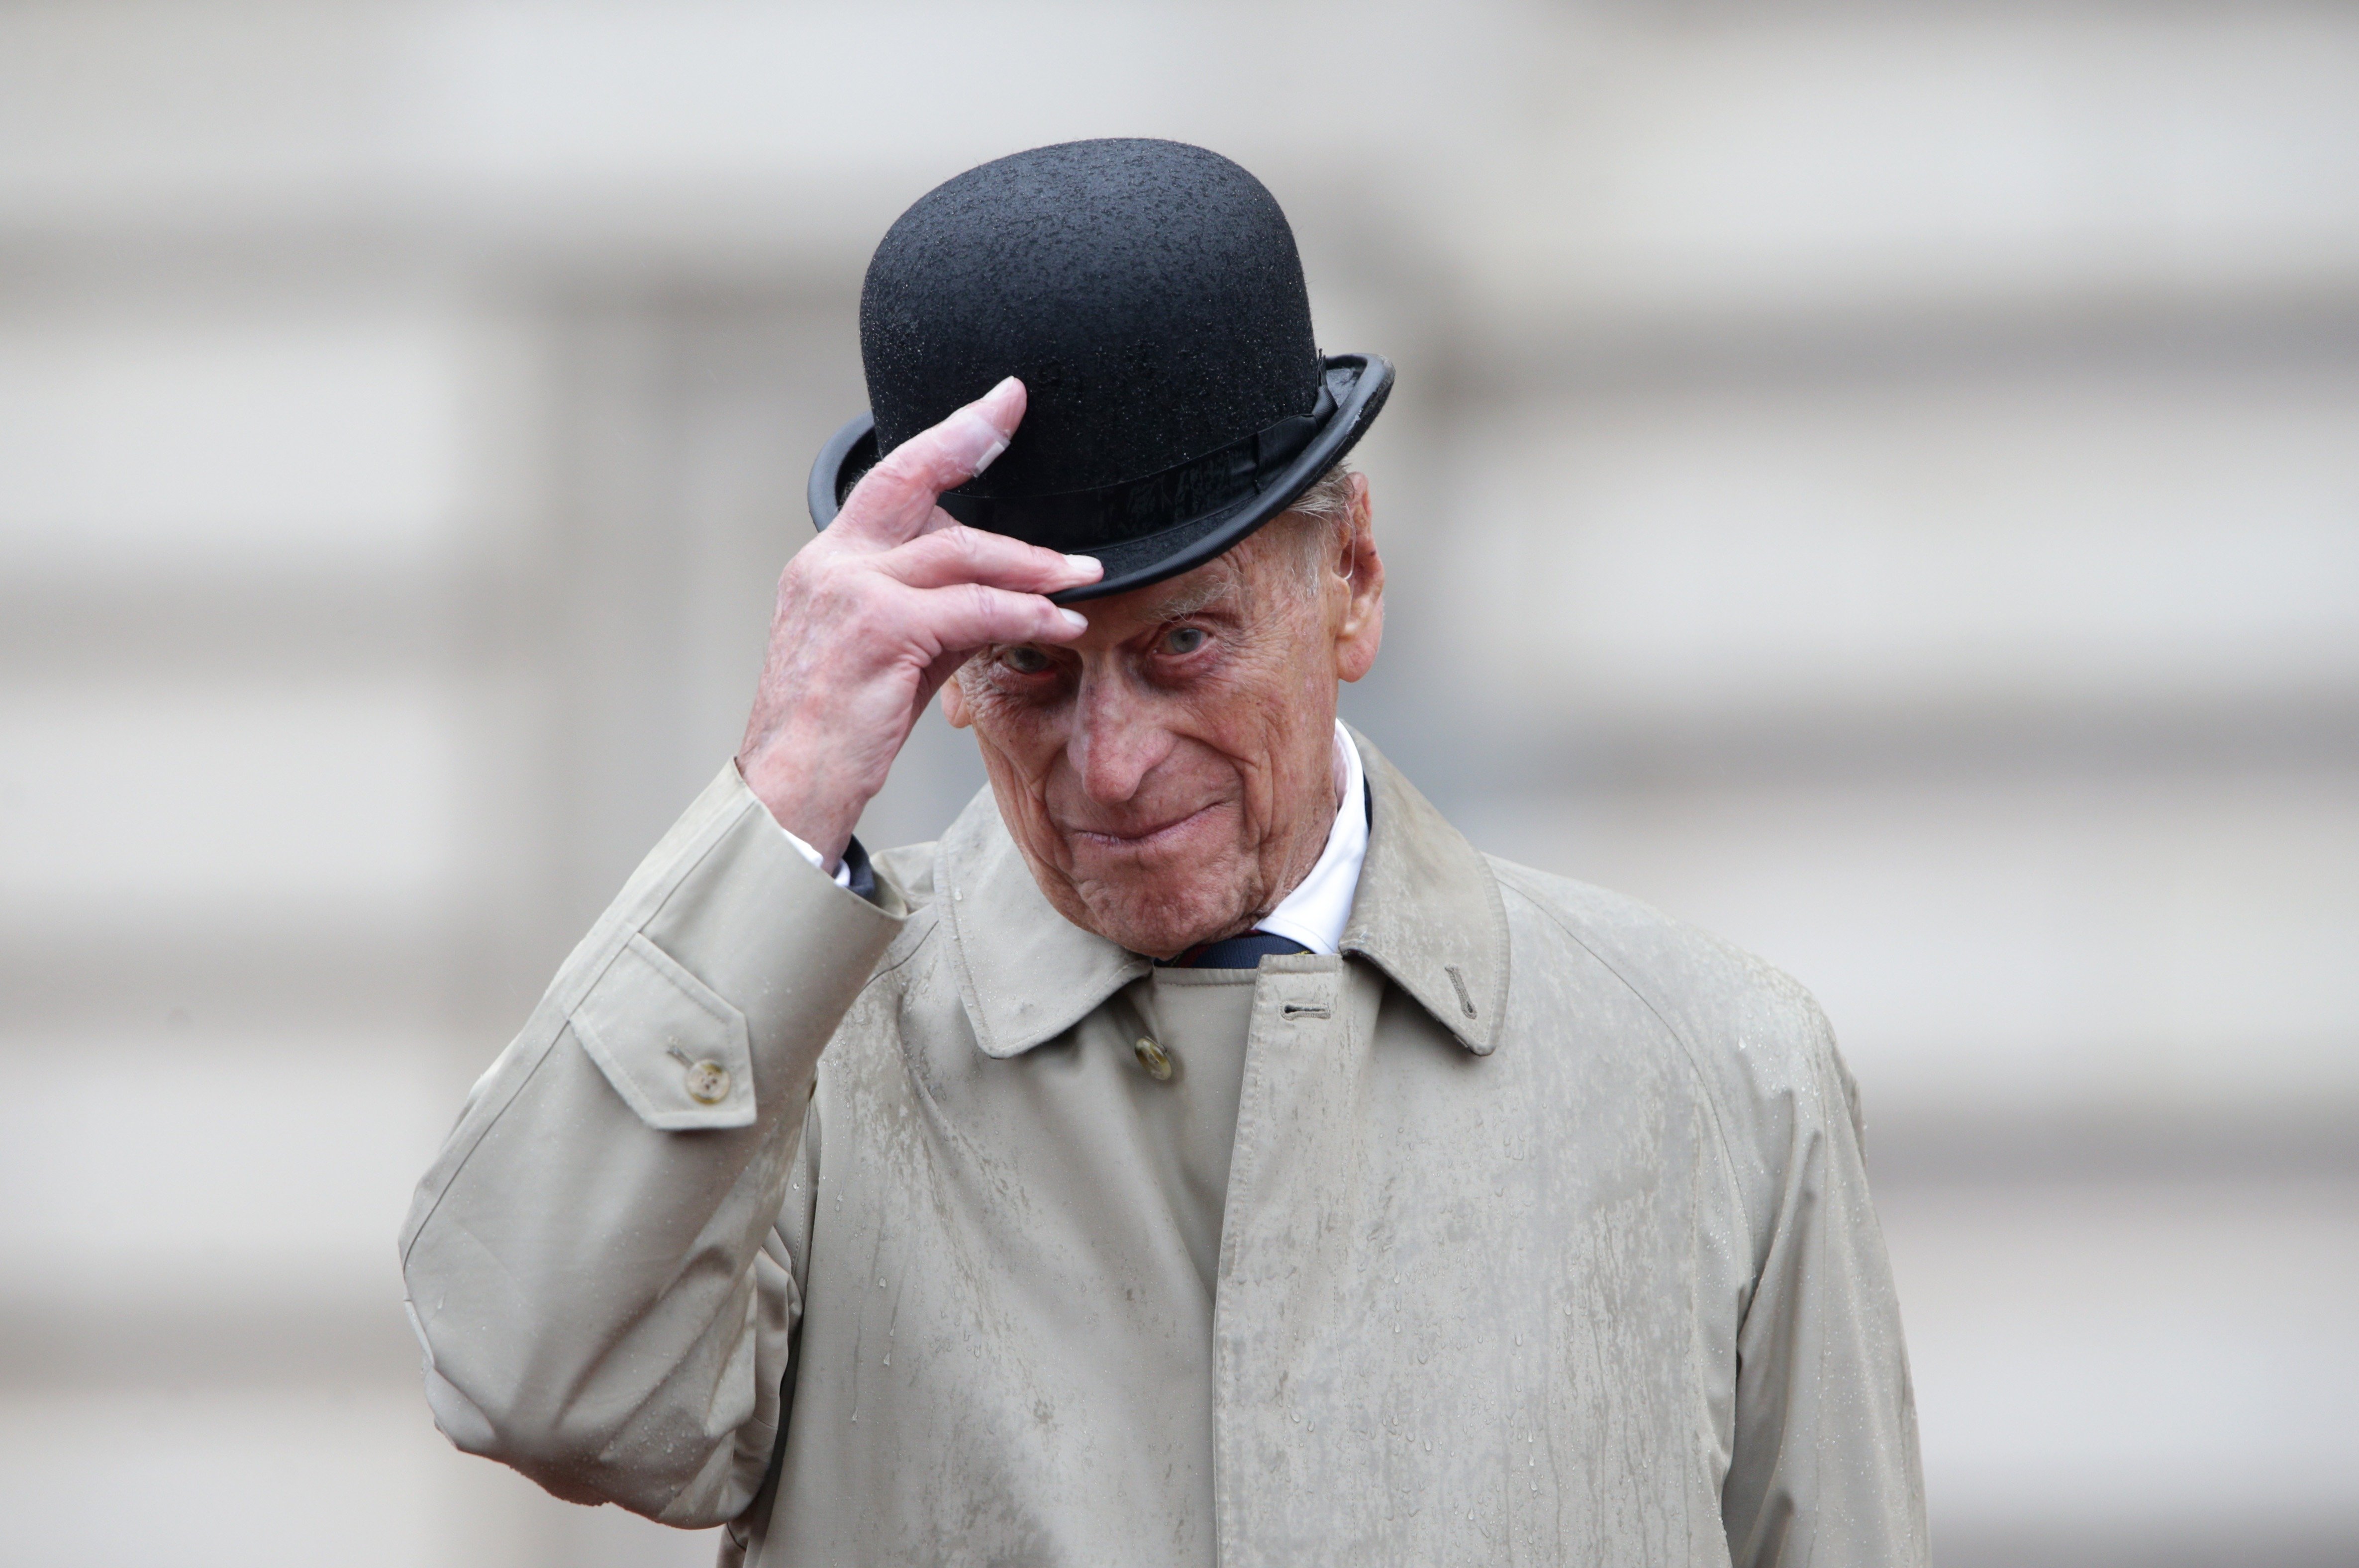 Prince Philip, Duke of Edinburgh raises his hat in his role as Captain General, Royal Marines